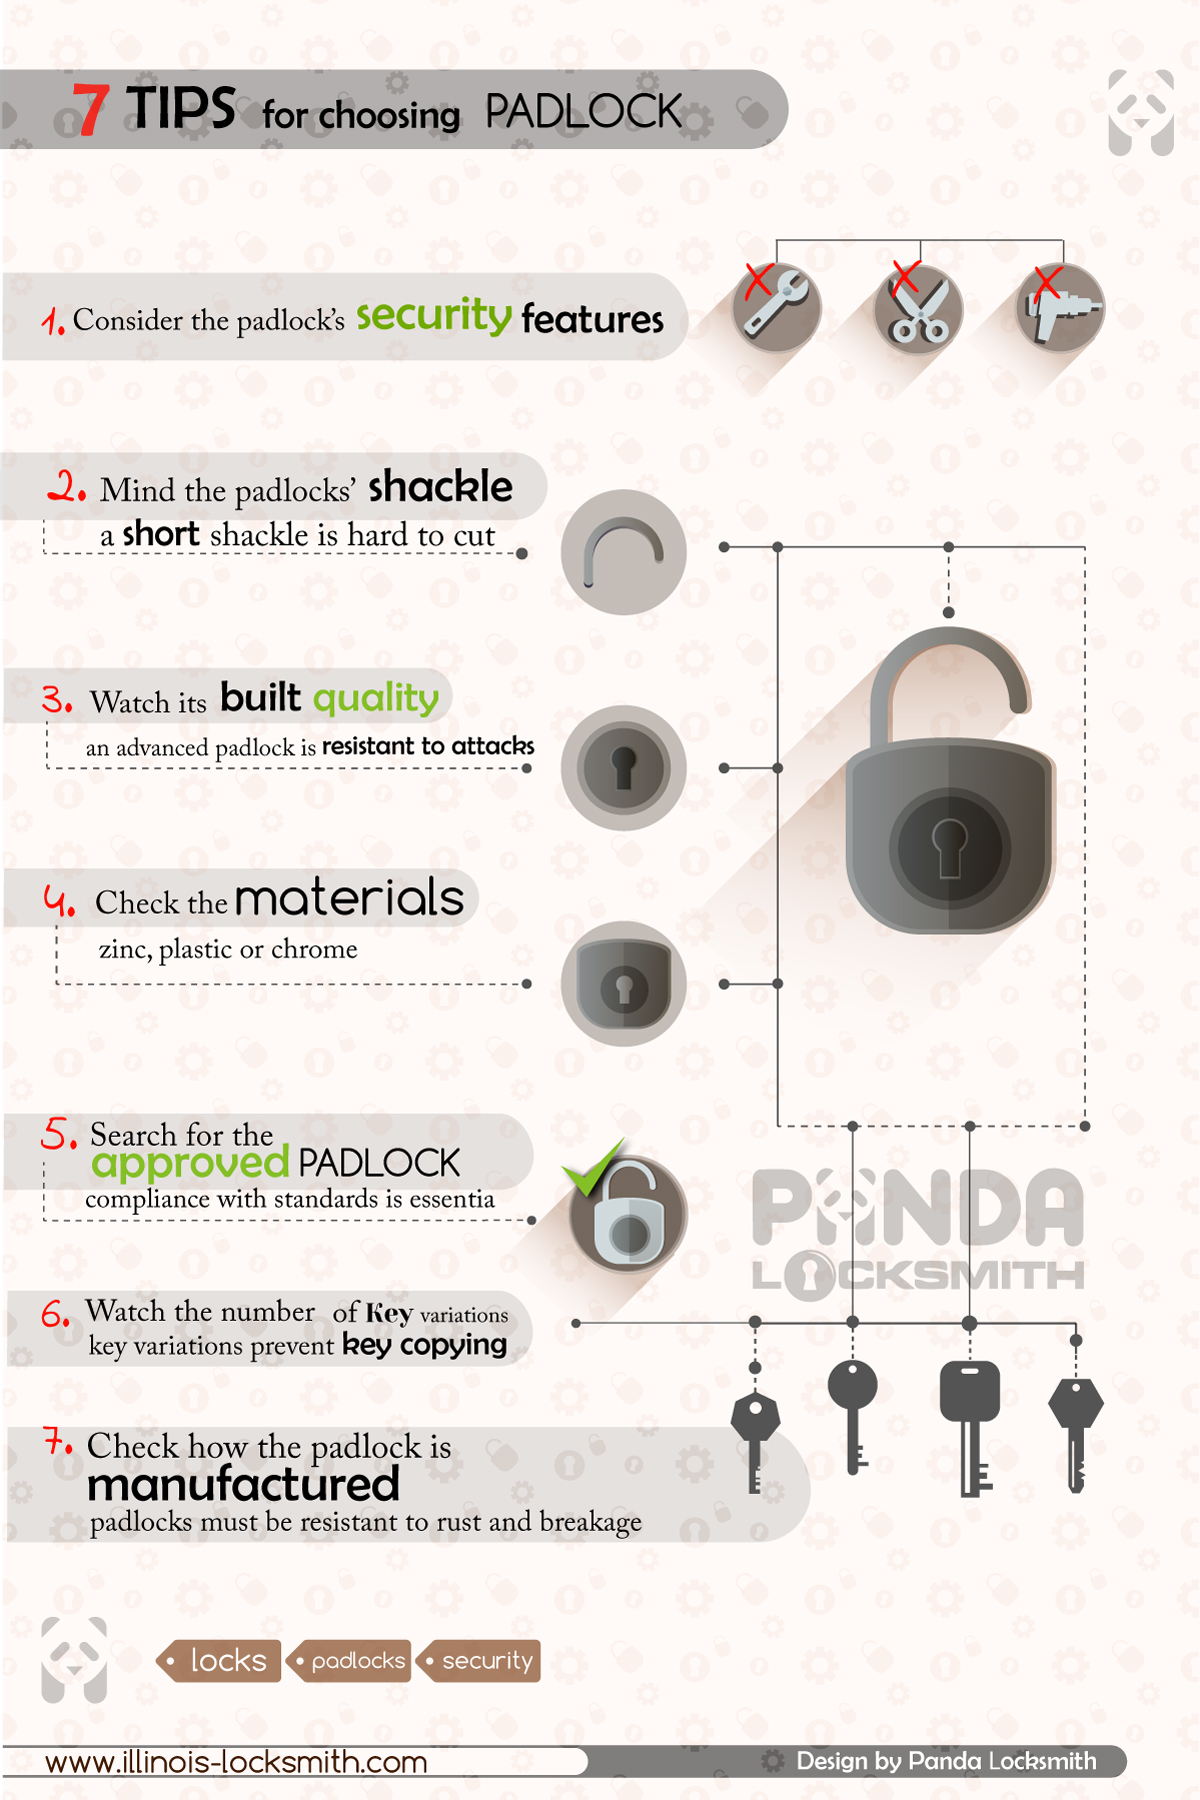 7 tips for choosing padlock - infographic